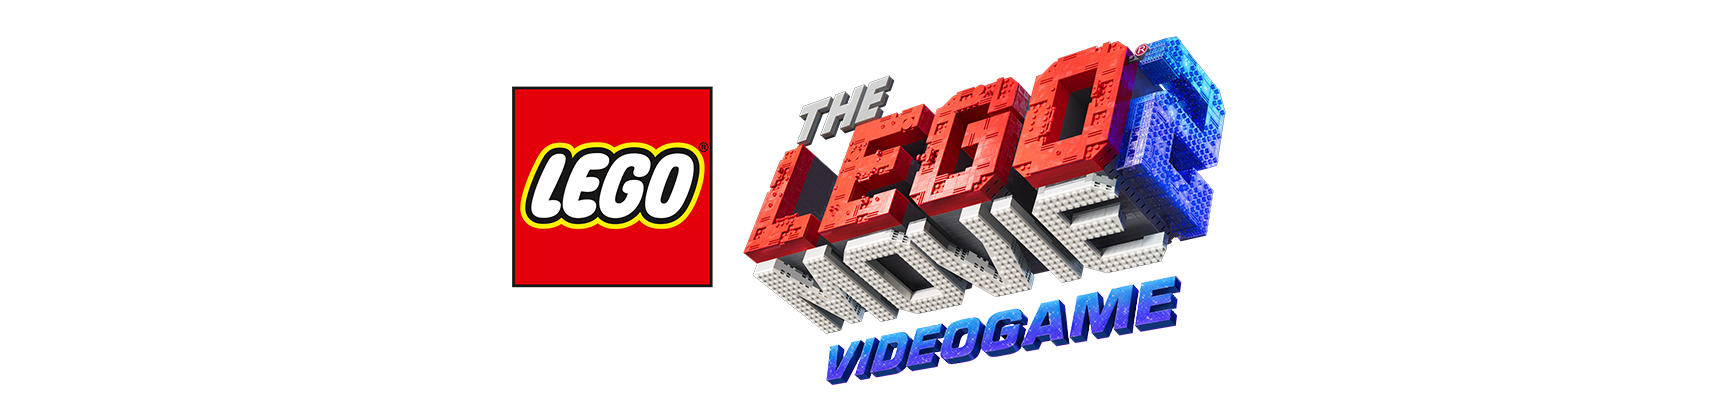 LEGO Movie 2: The Videogame logo